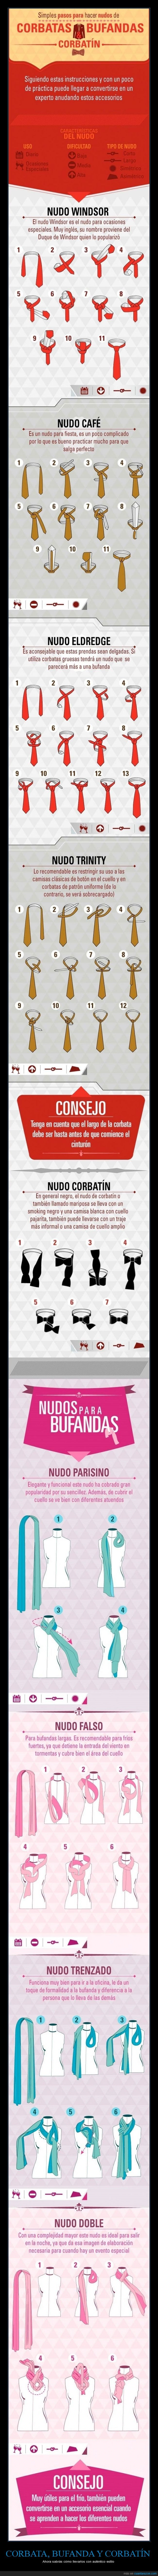 corbata,bufanda,corbatin,pajarita,nudo,lazo,instrucciones